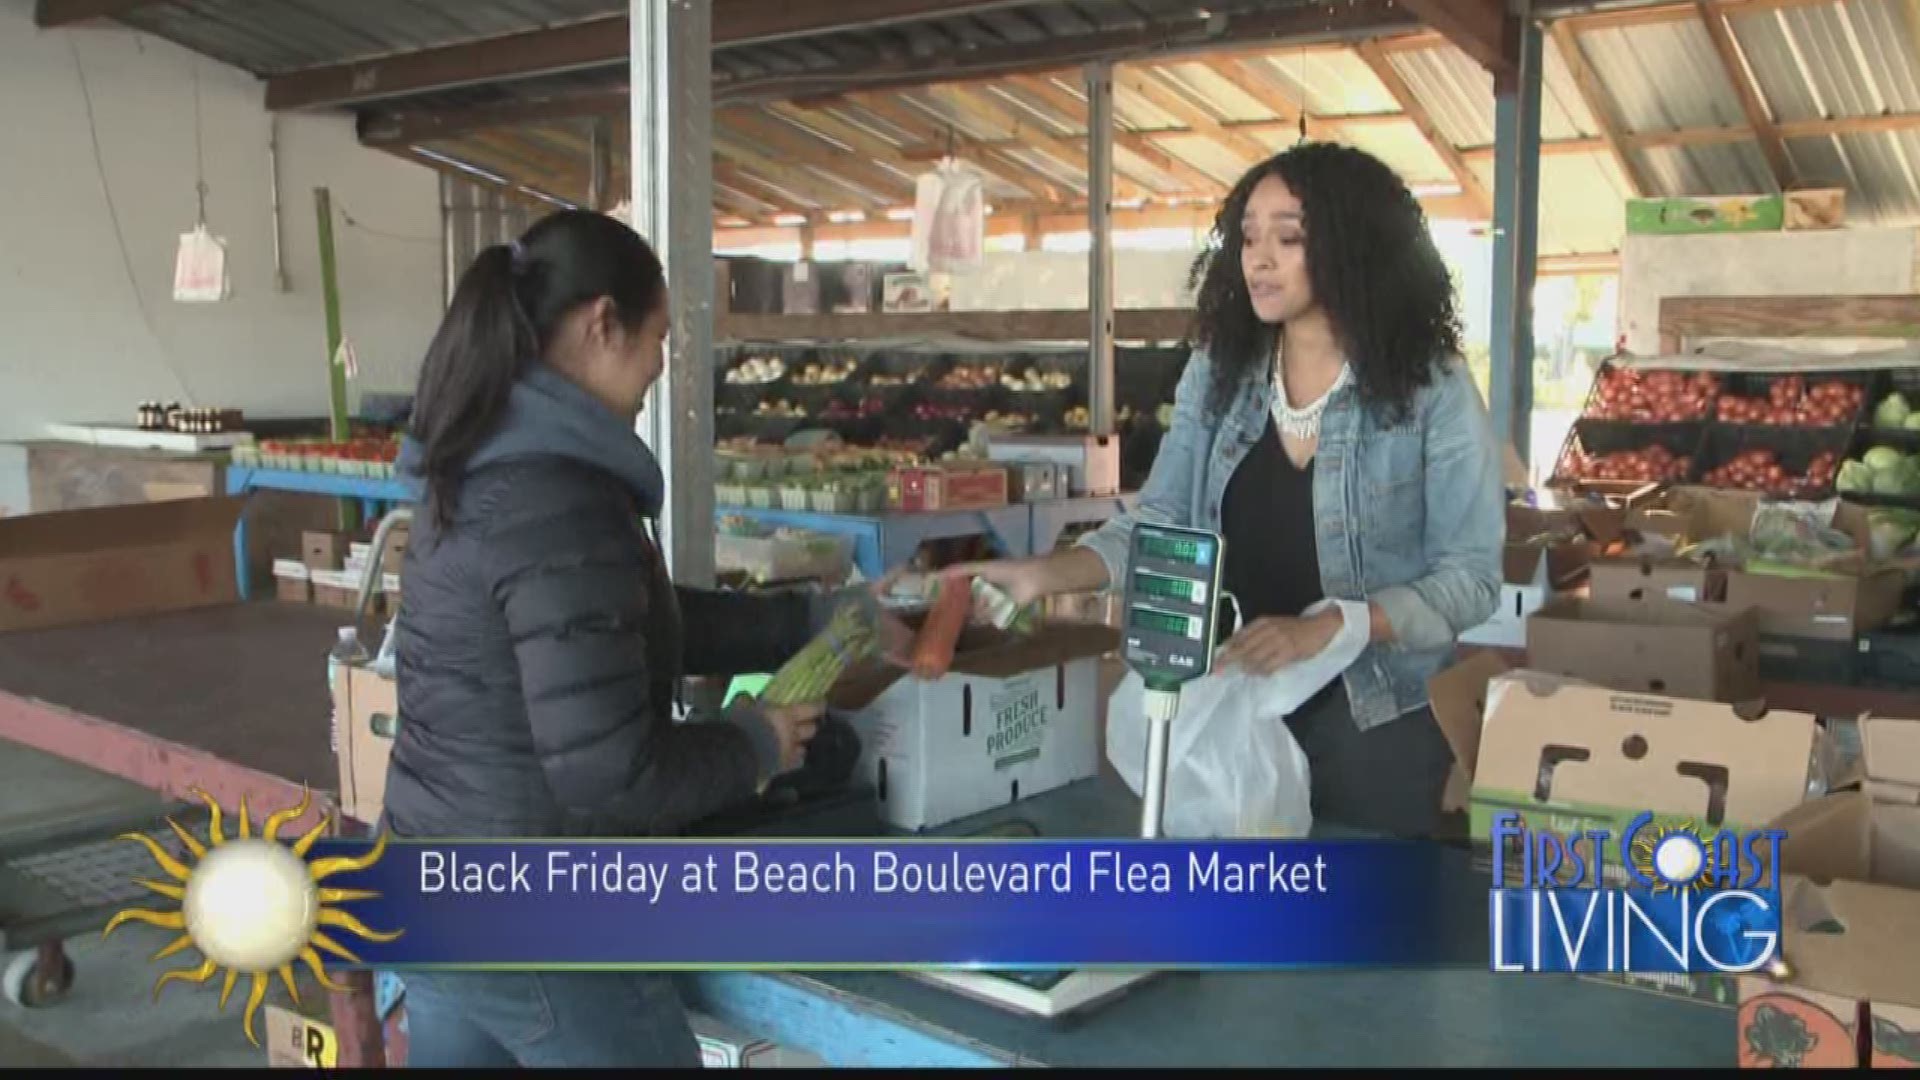 Black Friday shopping at Beach Boulevard Flea Market.